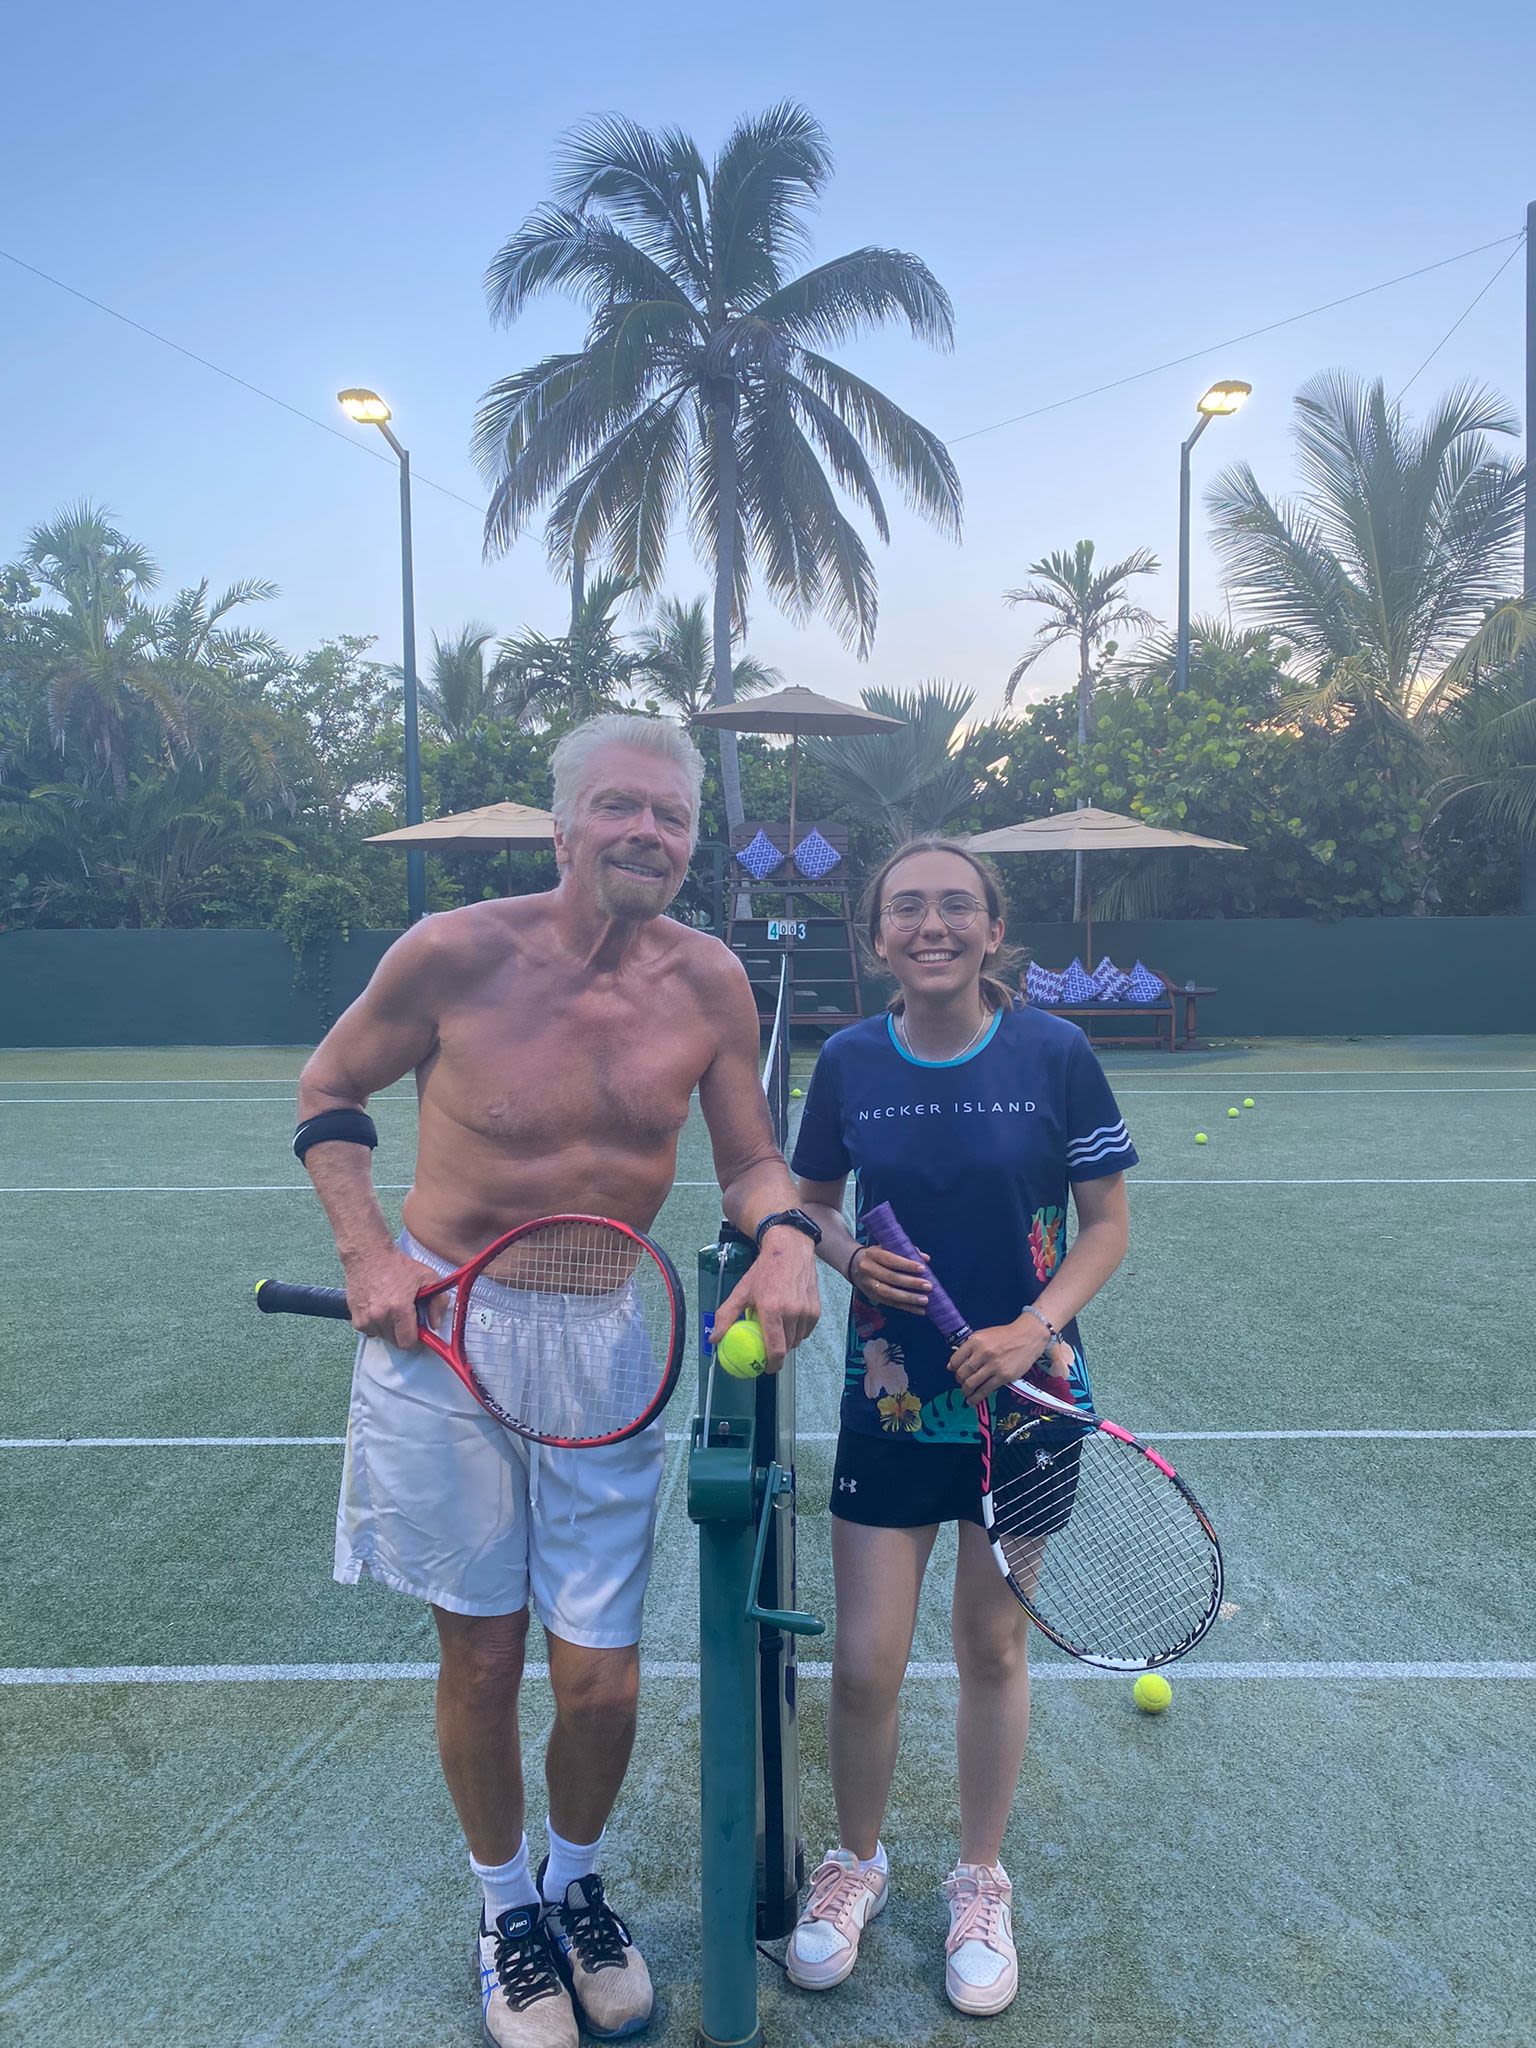 Richard Branson playing tennis with Zara Rutherford on Necker Island